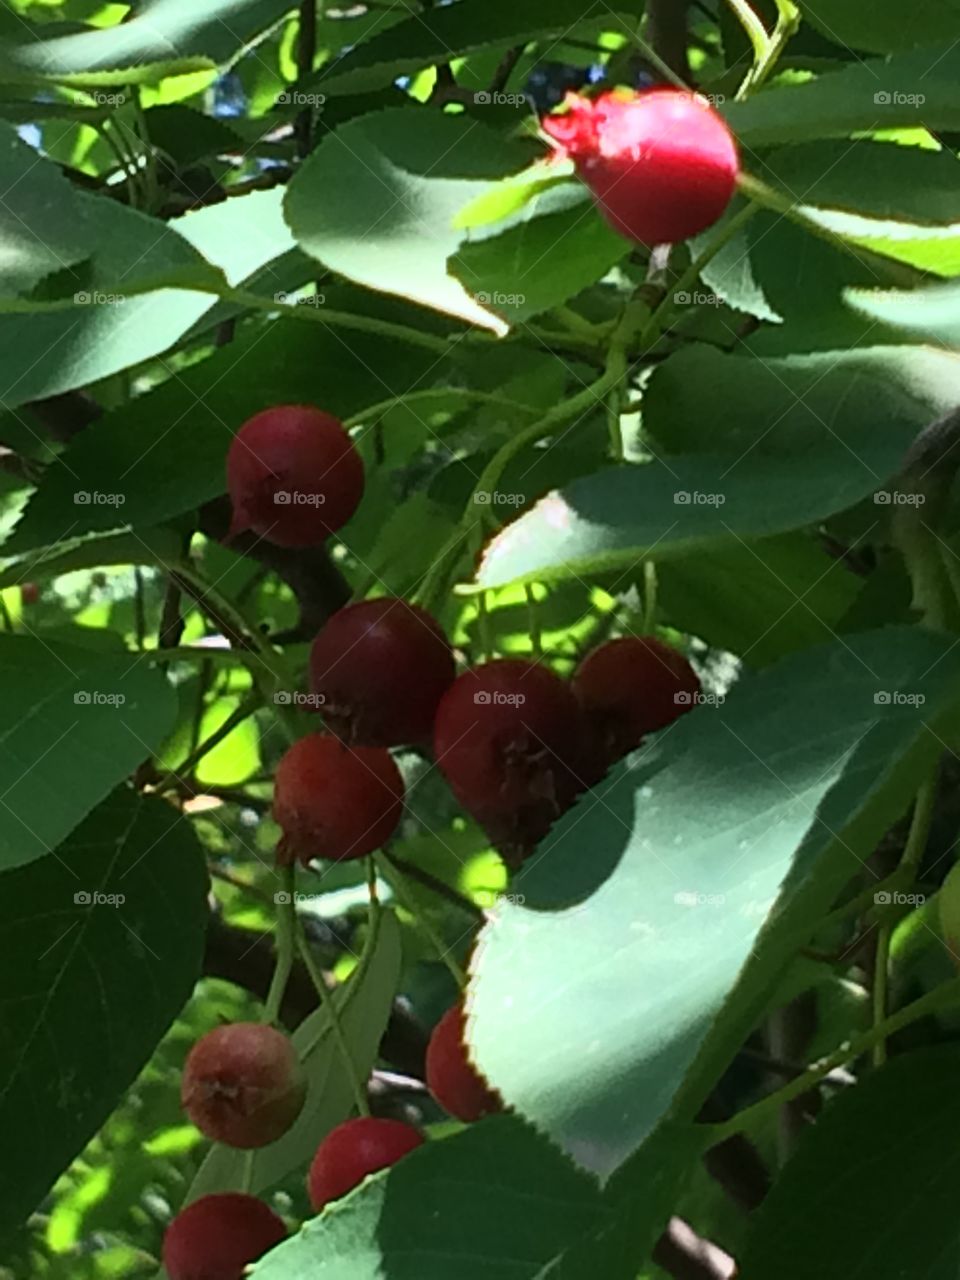 Native berries